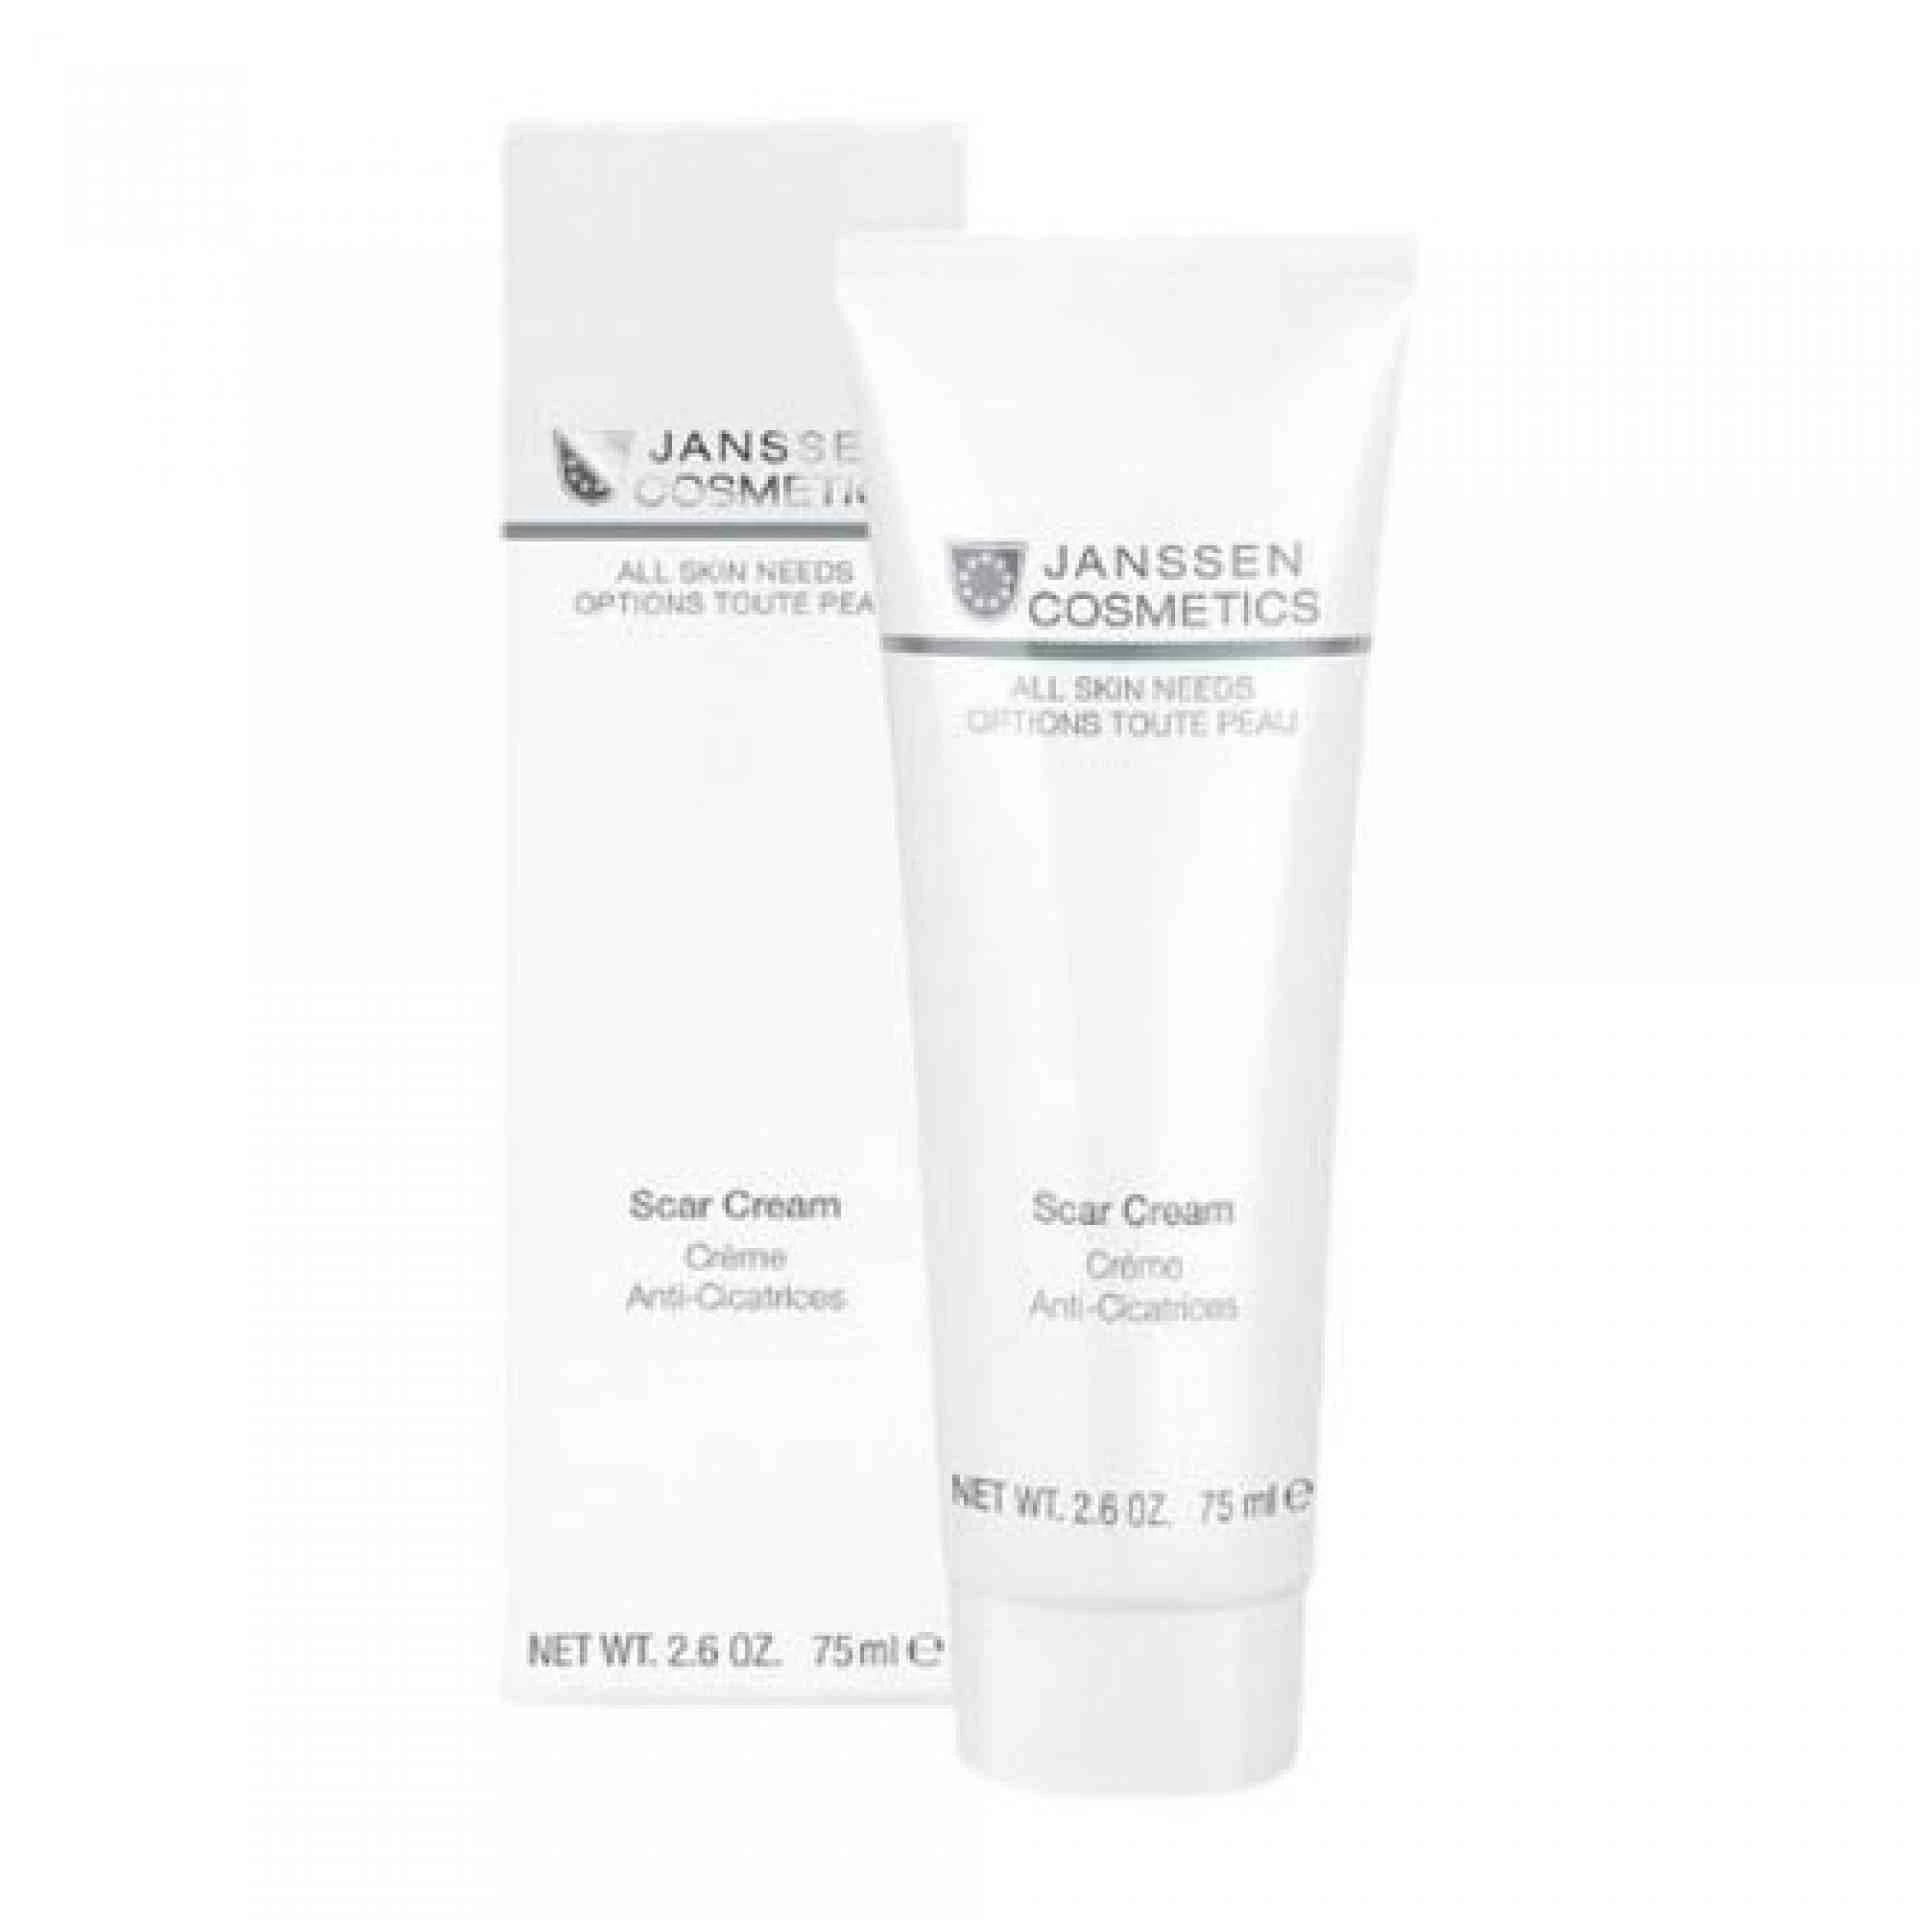 All Skins Needs Scar Cream 75ml Janssen Cosmetics®